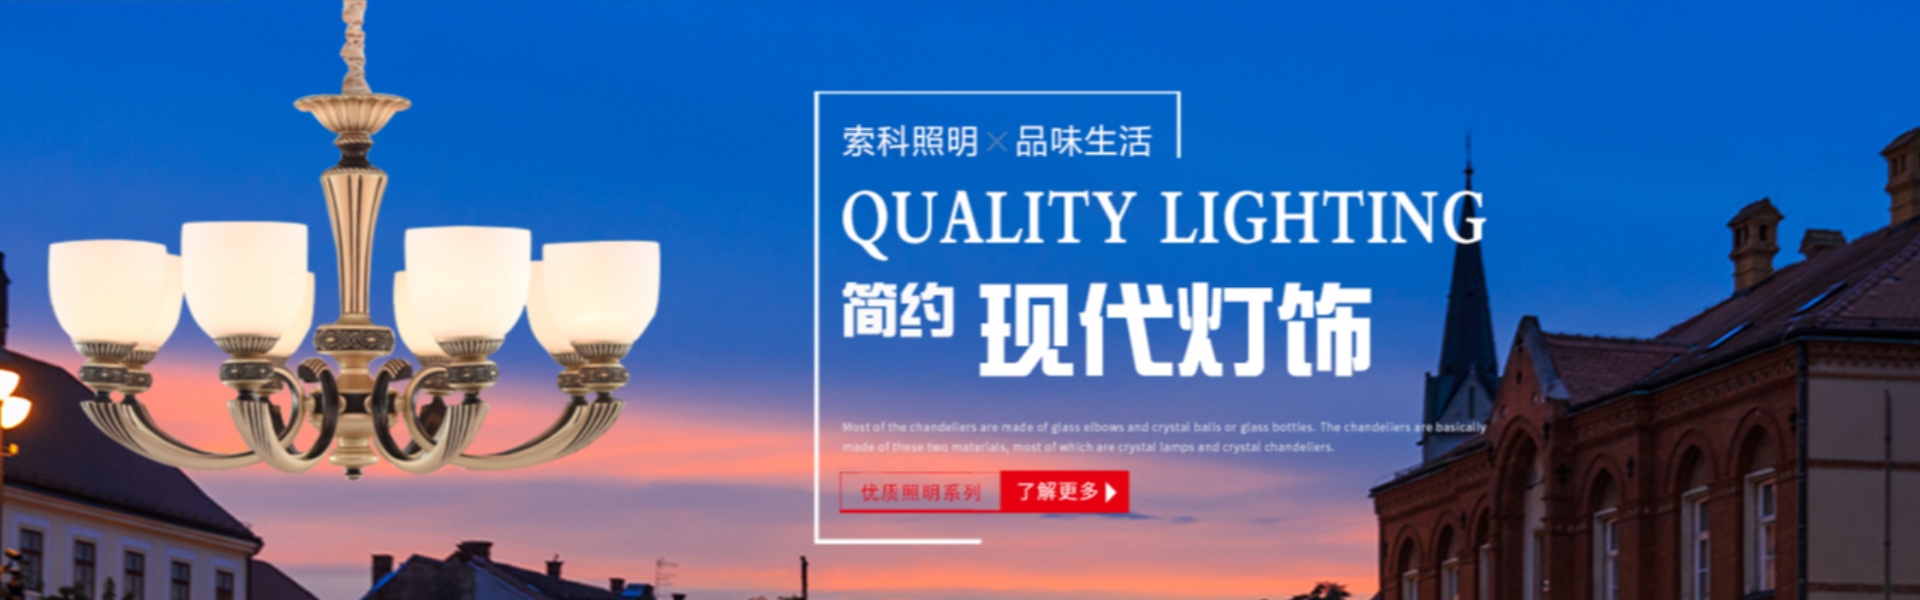 kodin valaistus, ulkovalaistus, aurinkovalaistus,Zhongshan Suoke Lighting Electric Co., Ltd.